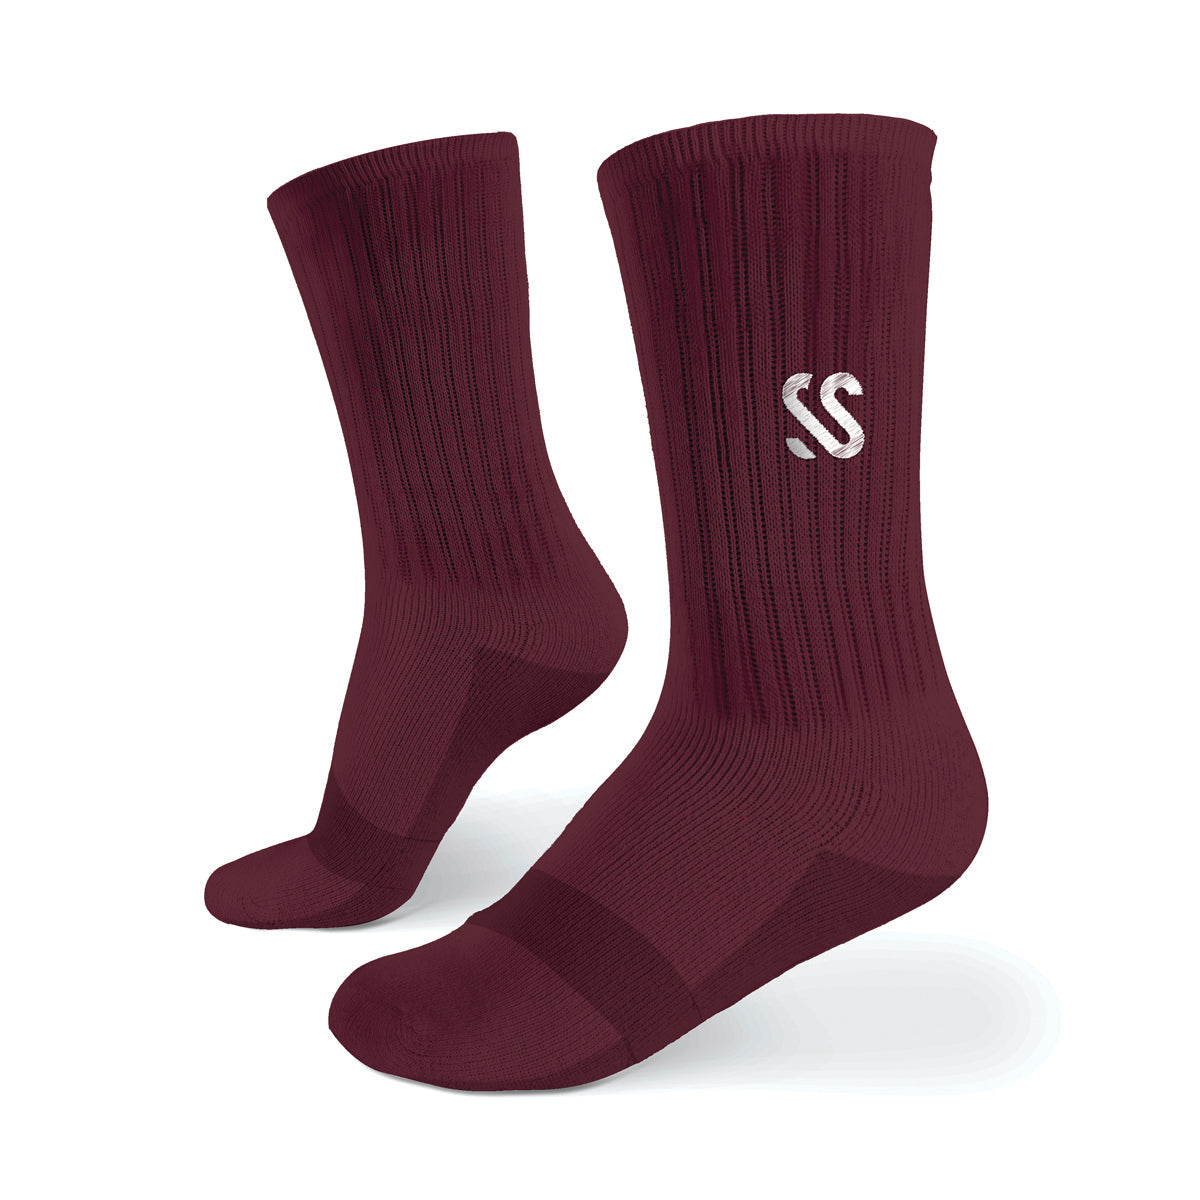 A pair of burgundy crew length socks